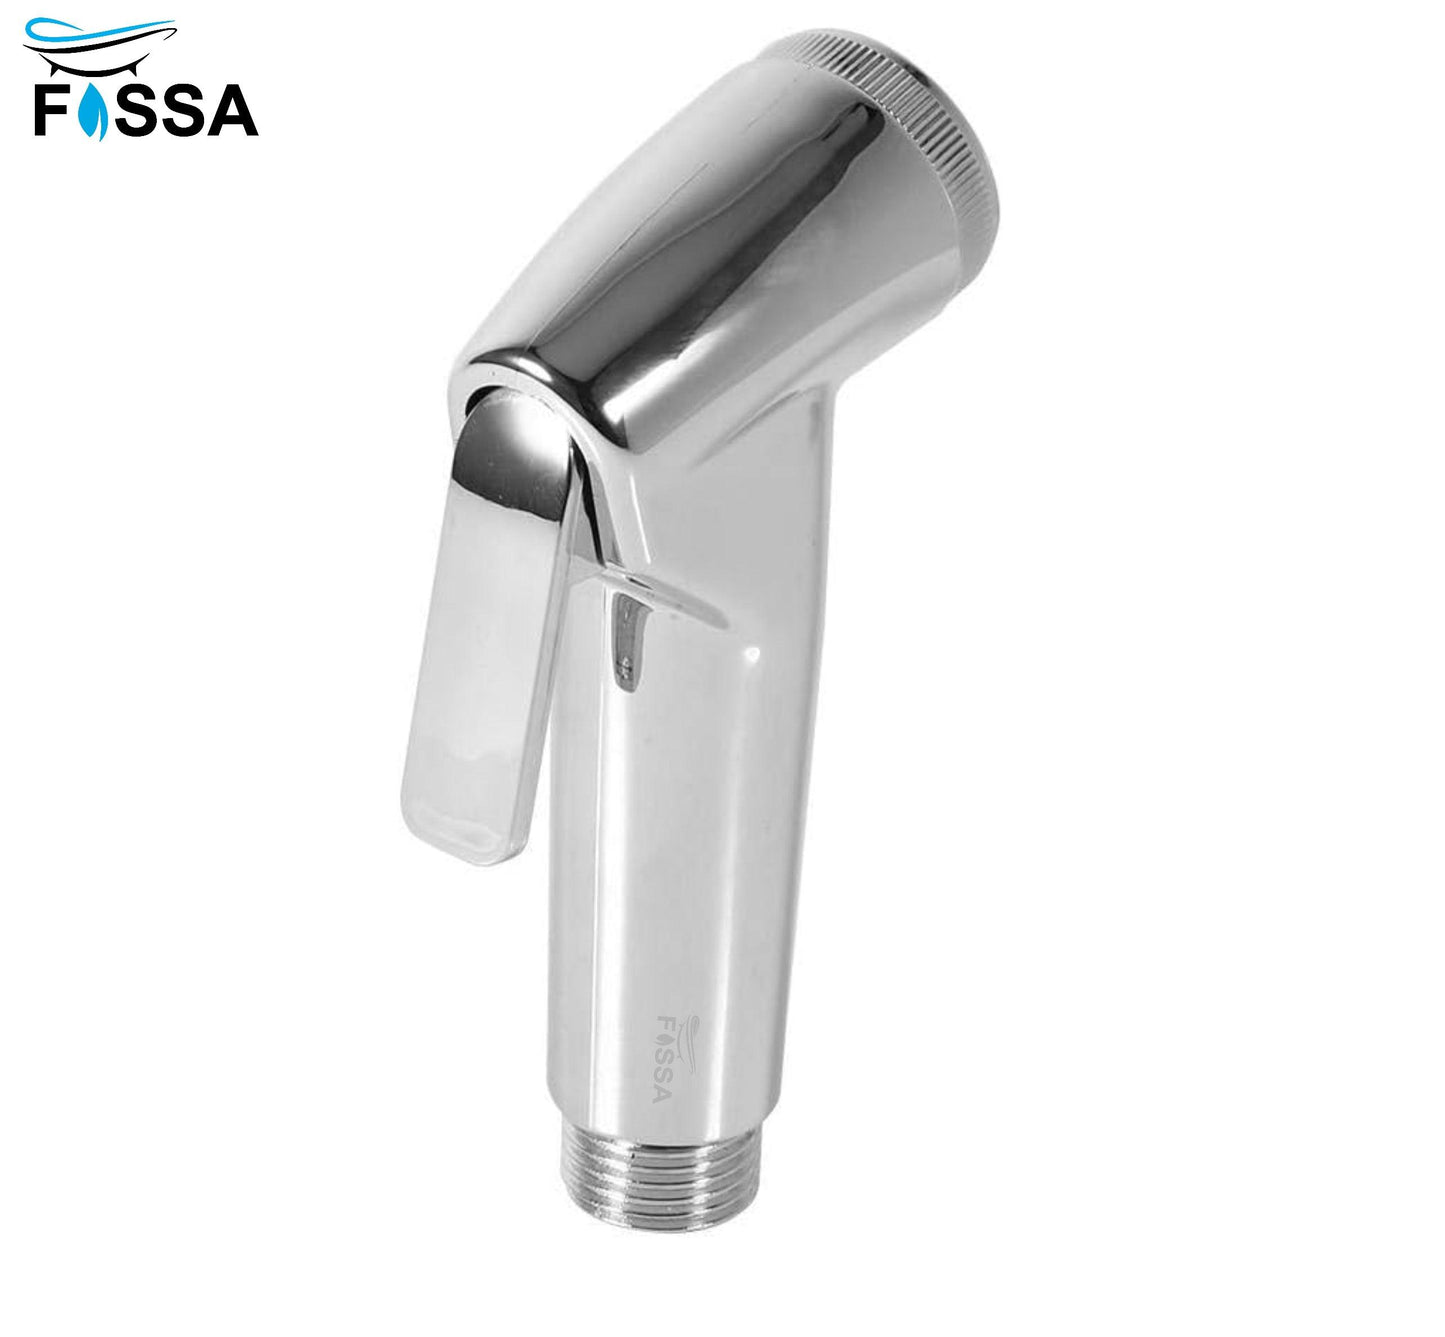 Fossa Hand Held Bidet Sprayer, Multi-Functional Bathroom Toilet Personal Hygiene Shower Head - Fossa Home 